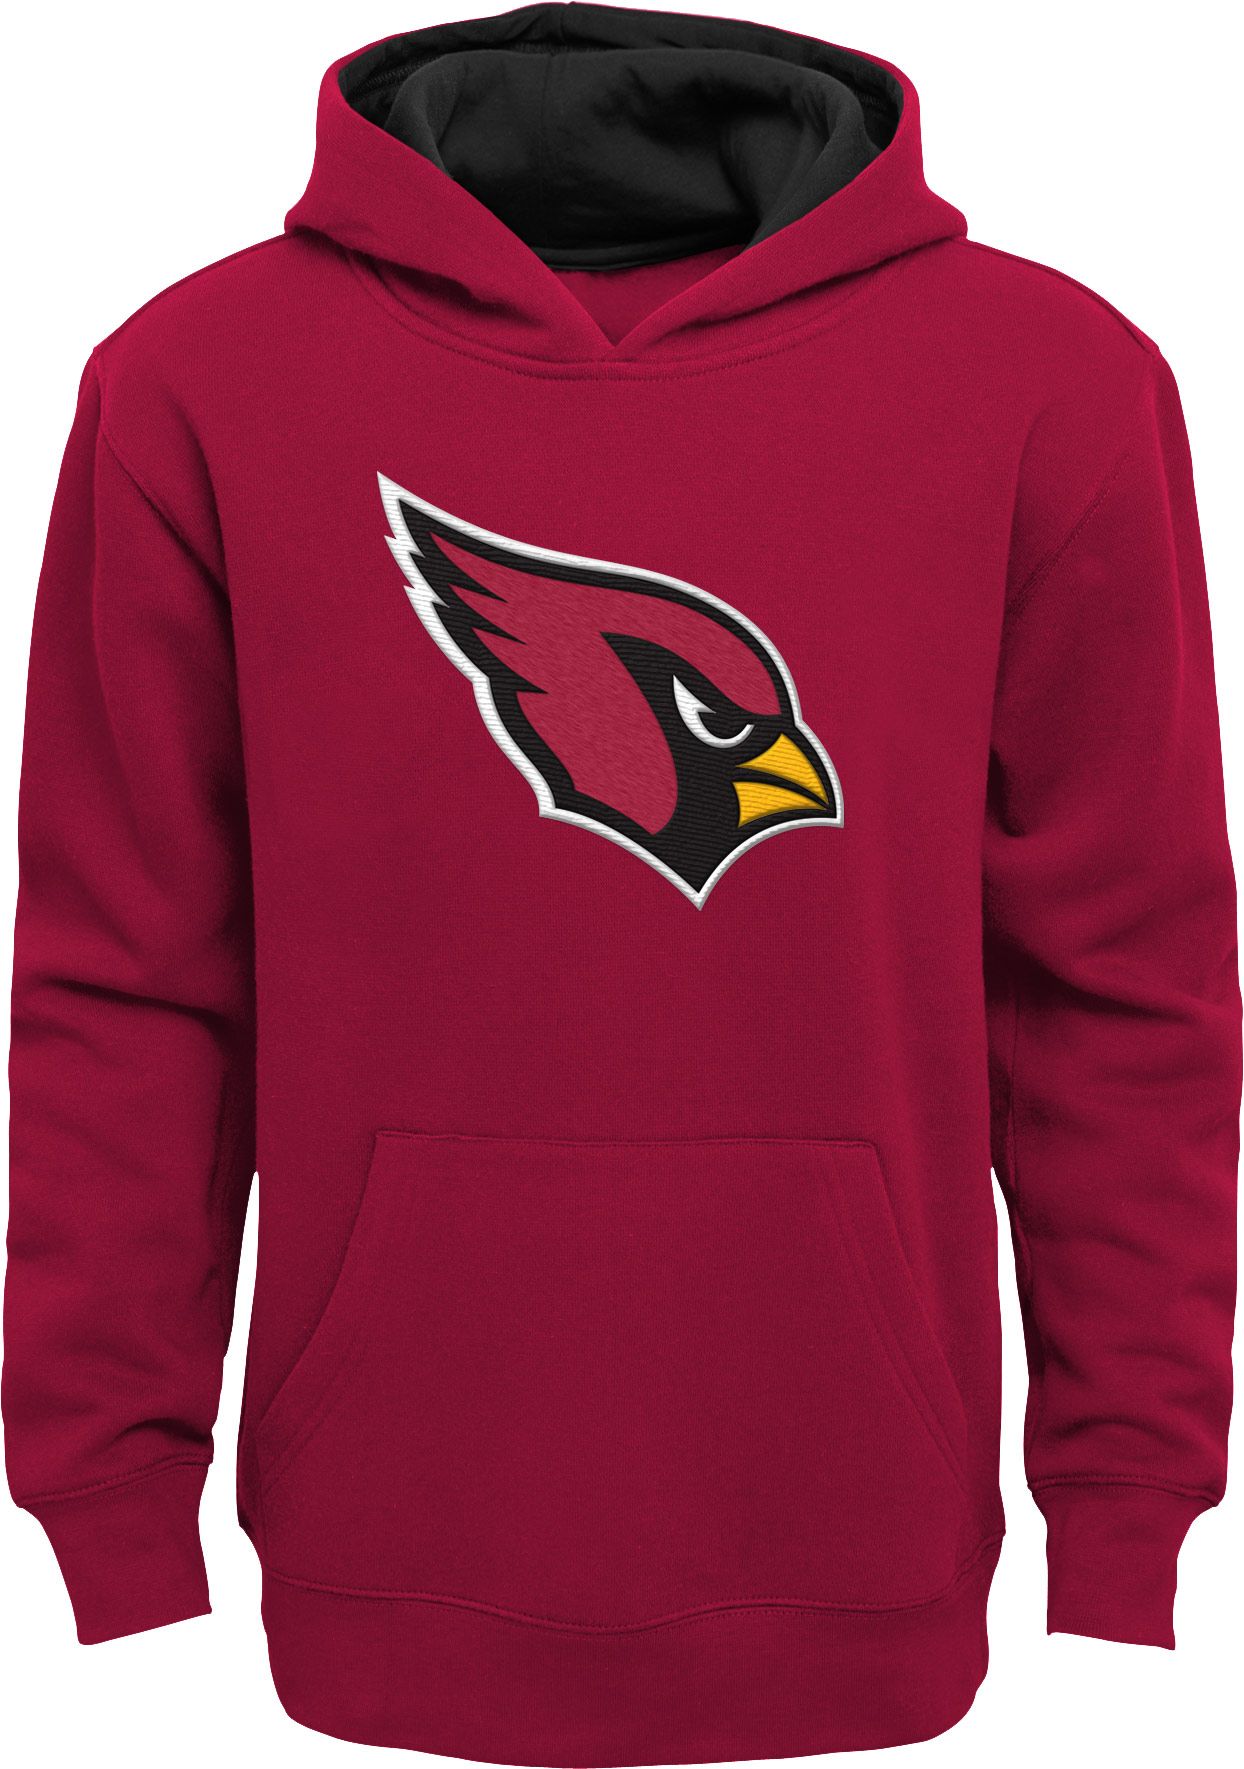 arizona cardinals youth hoodie